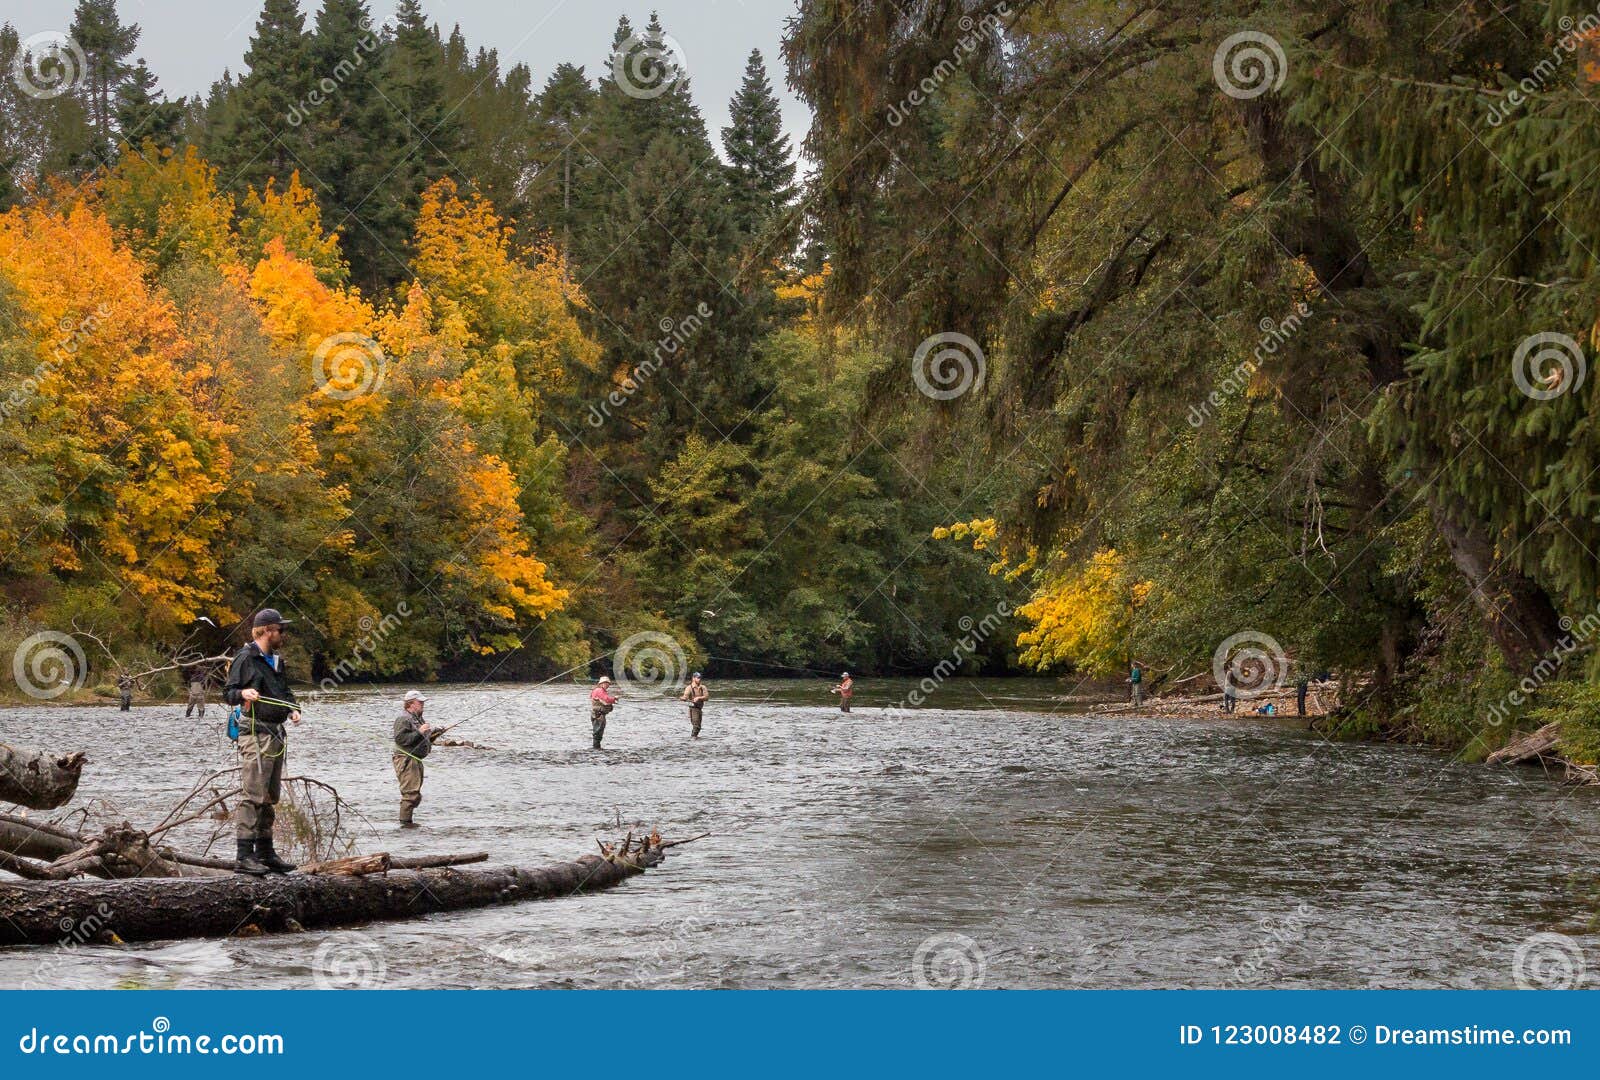 294 British Columbia Fishing People Stock Photos - Free & Royalty